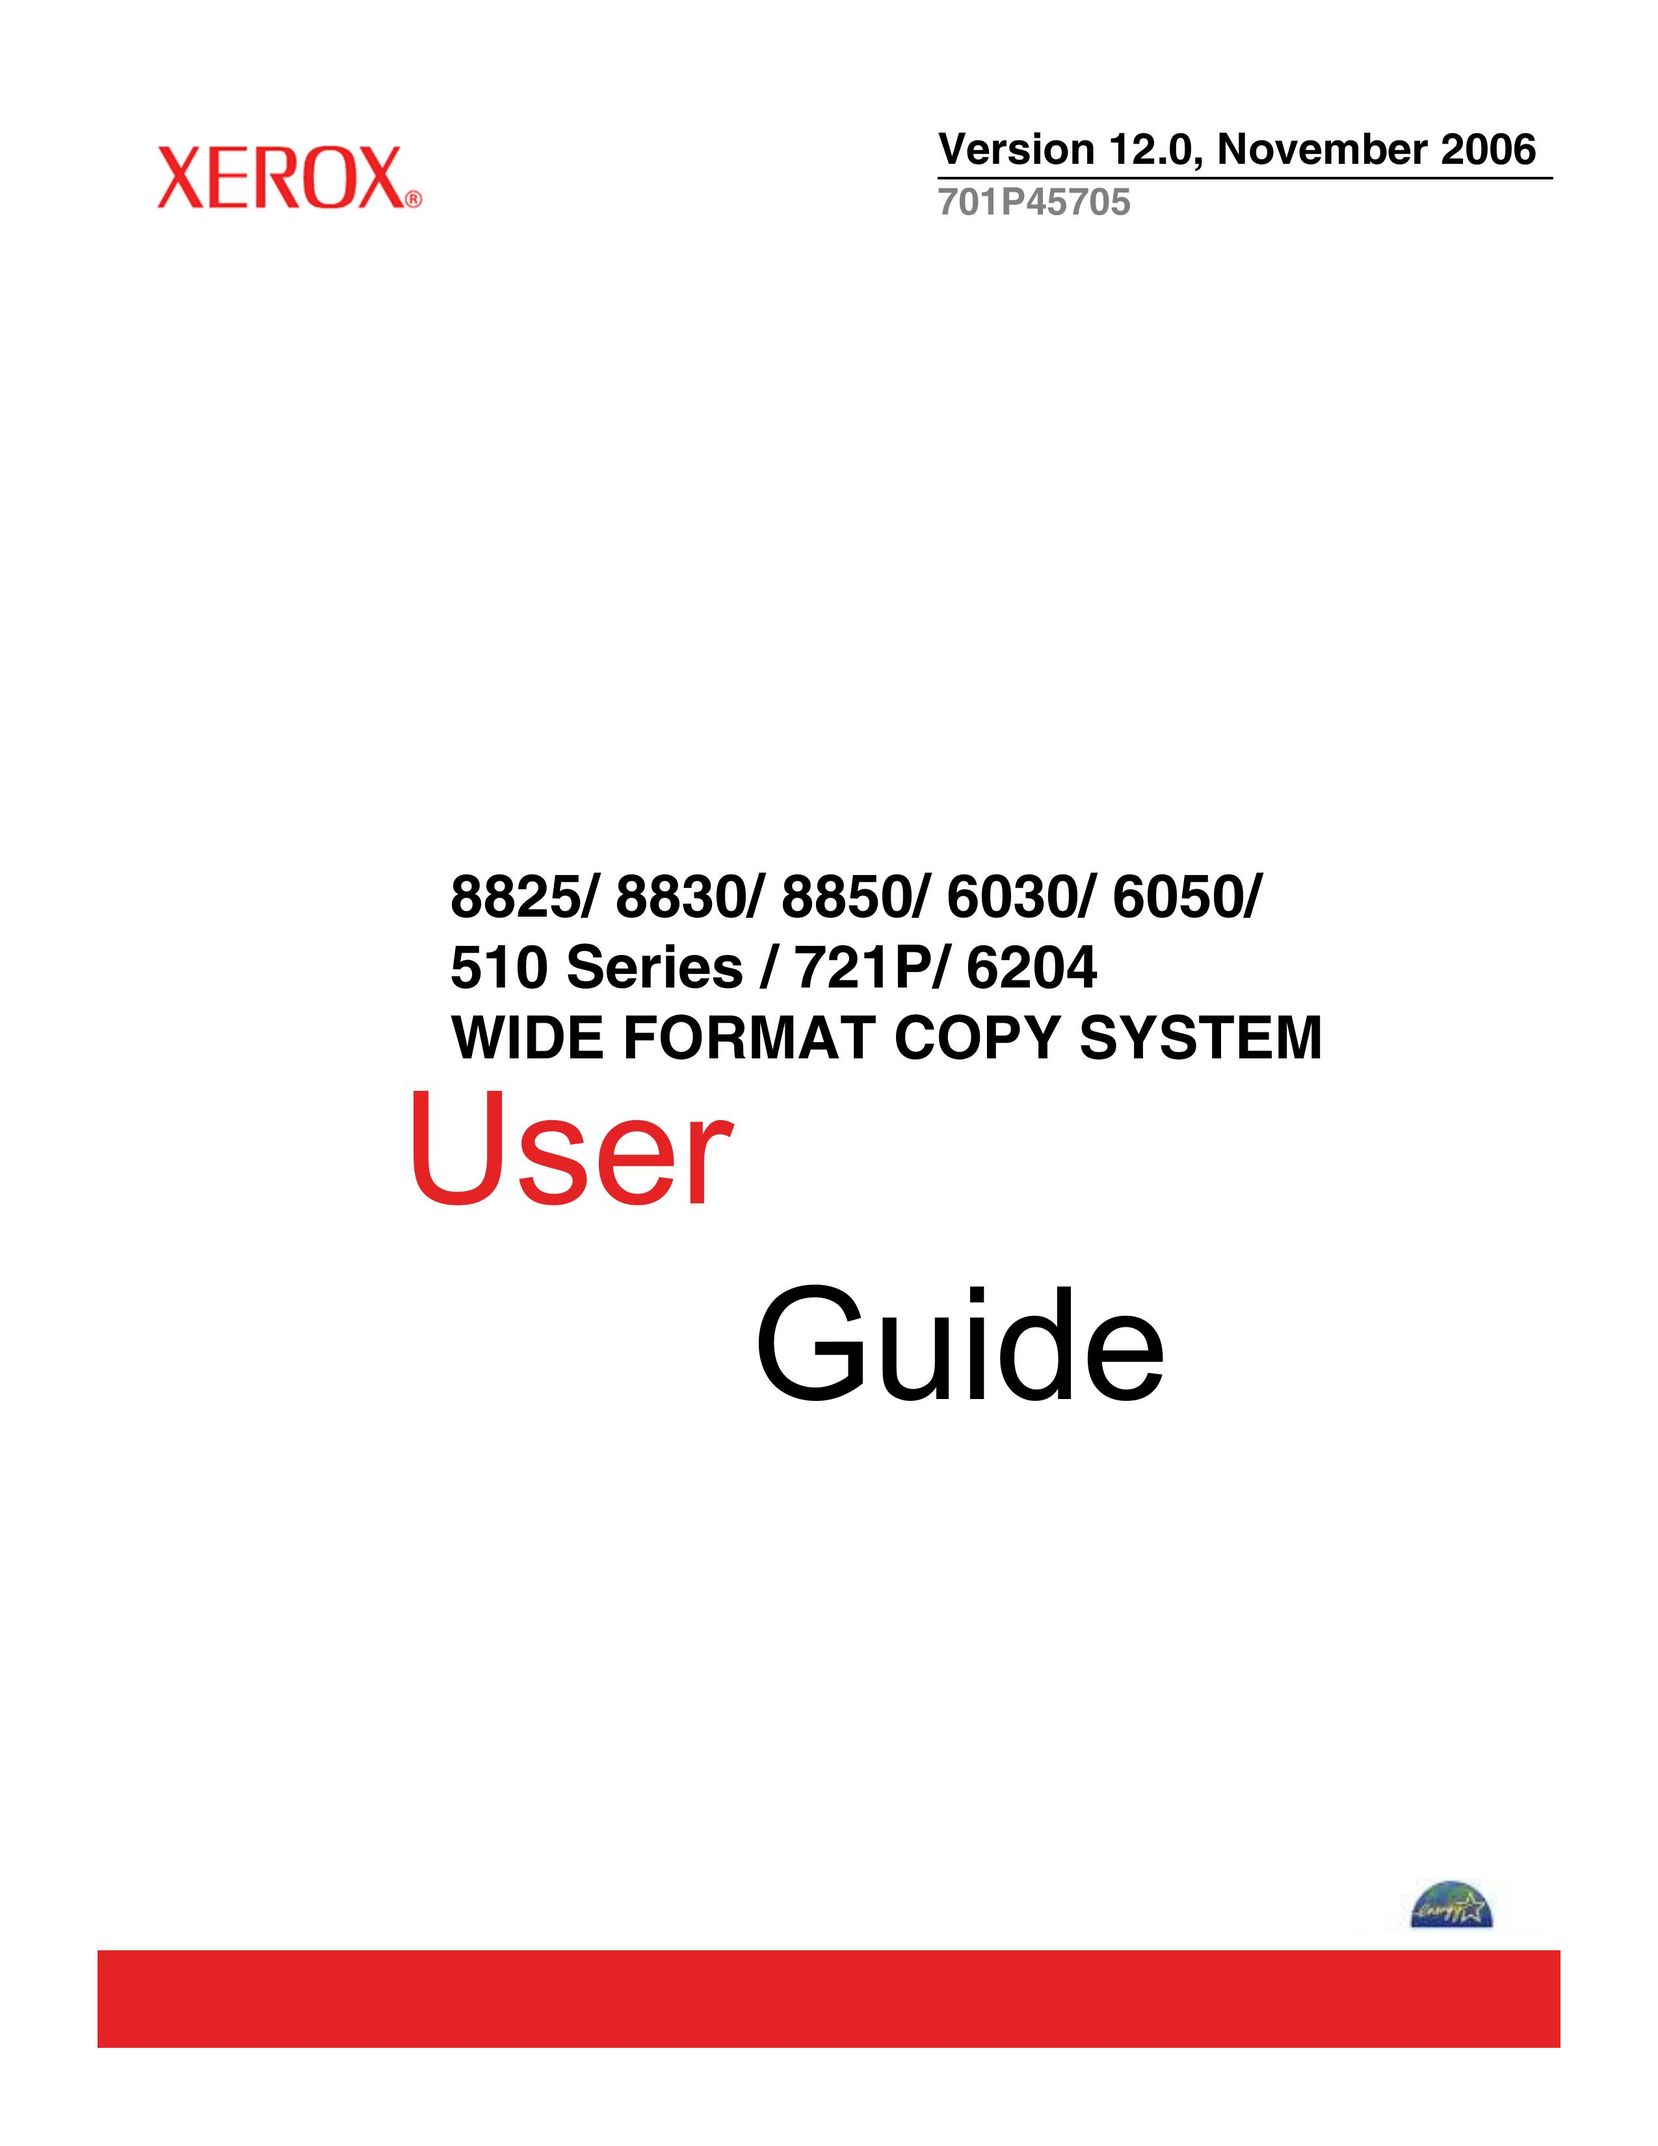 Xerox 6050 Copier User Manual